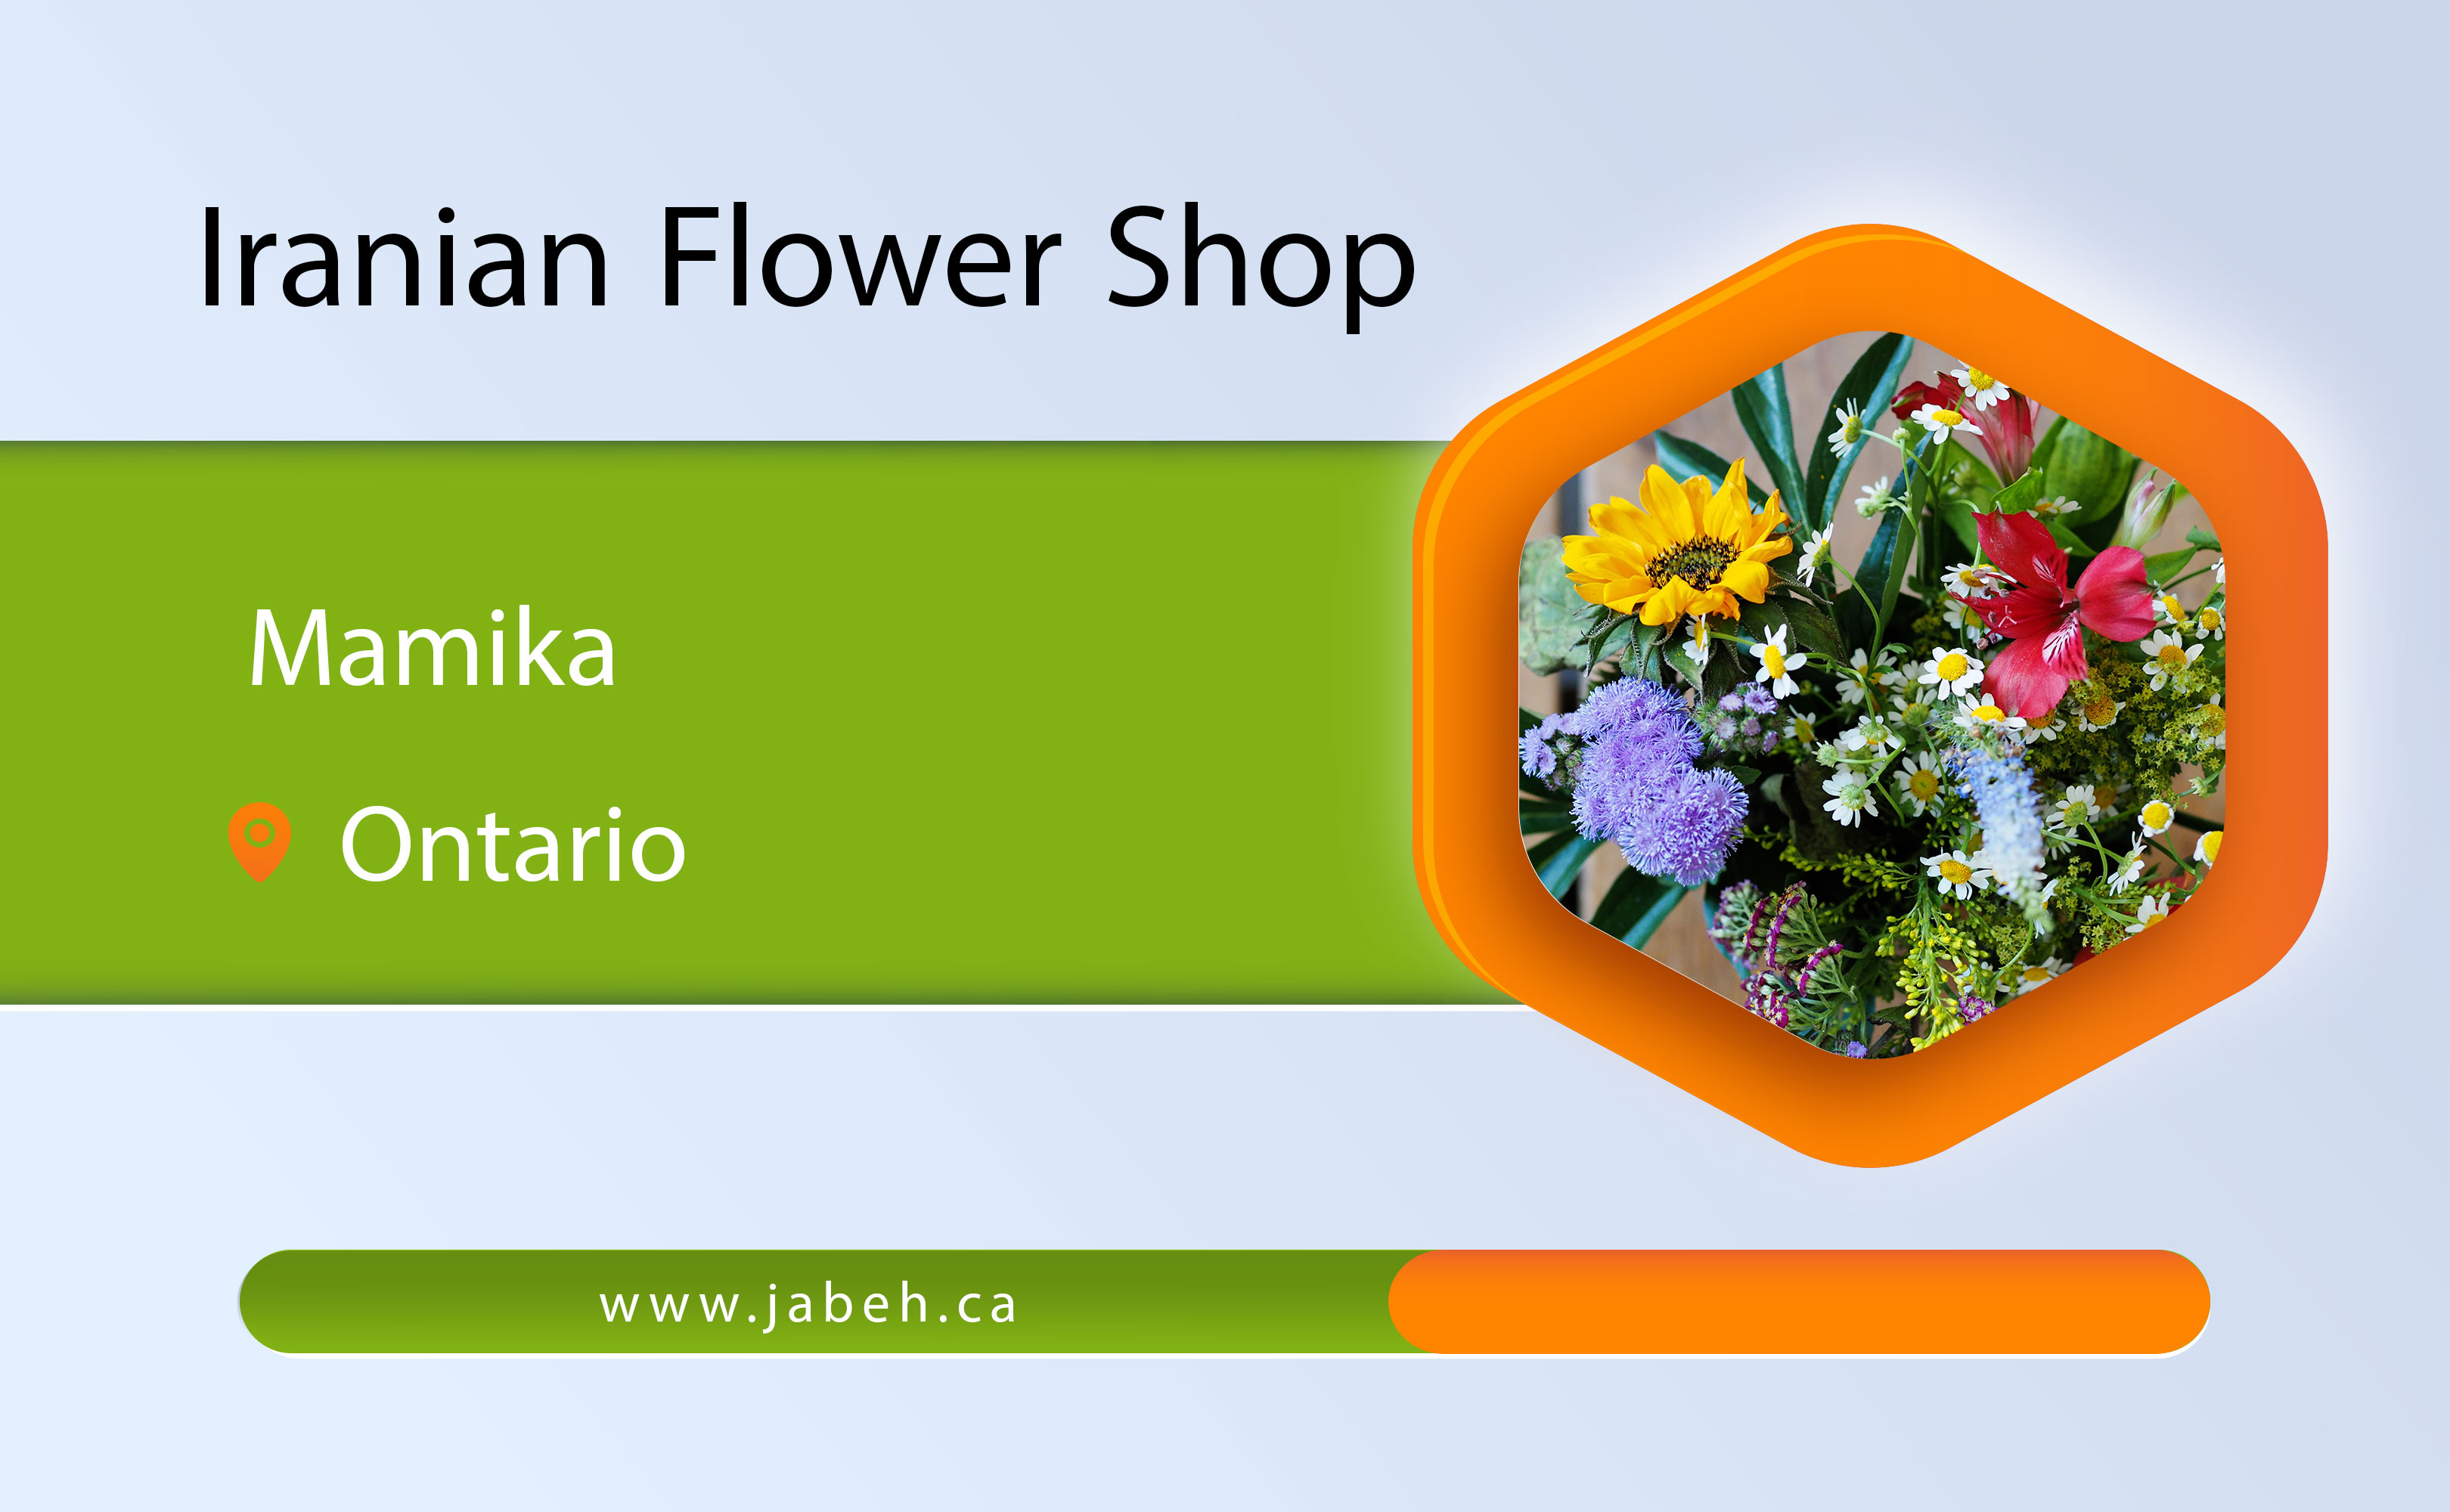 Mamika Iranian flower shop in Ontario